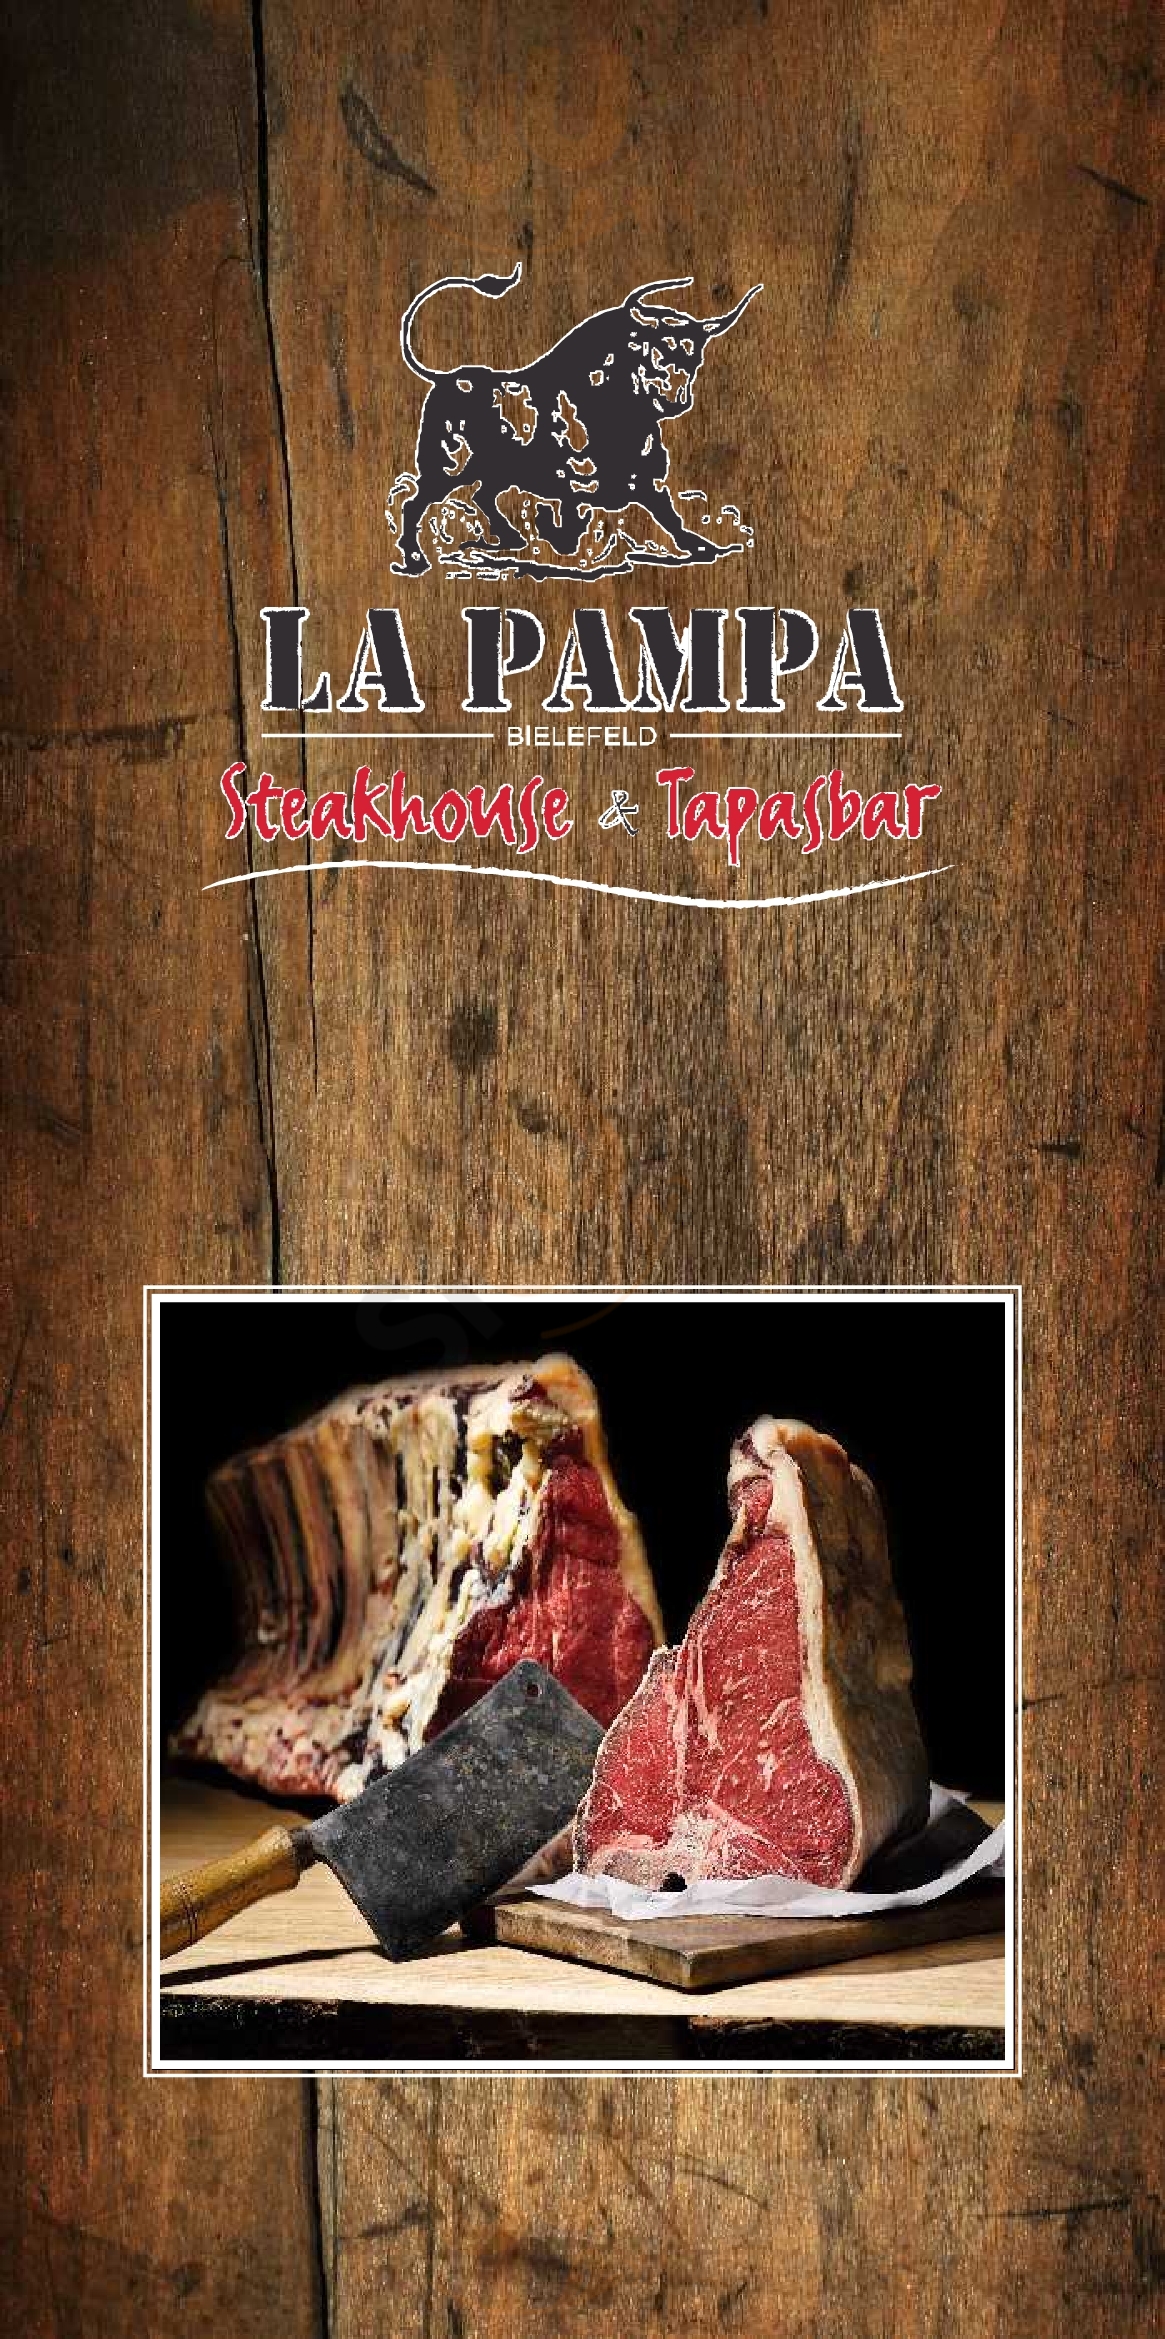 La Pampa Steakhouse & Tapasbar Bielefeld Menu - 1